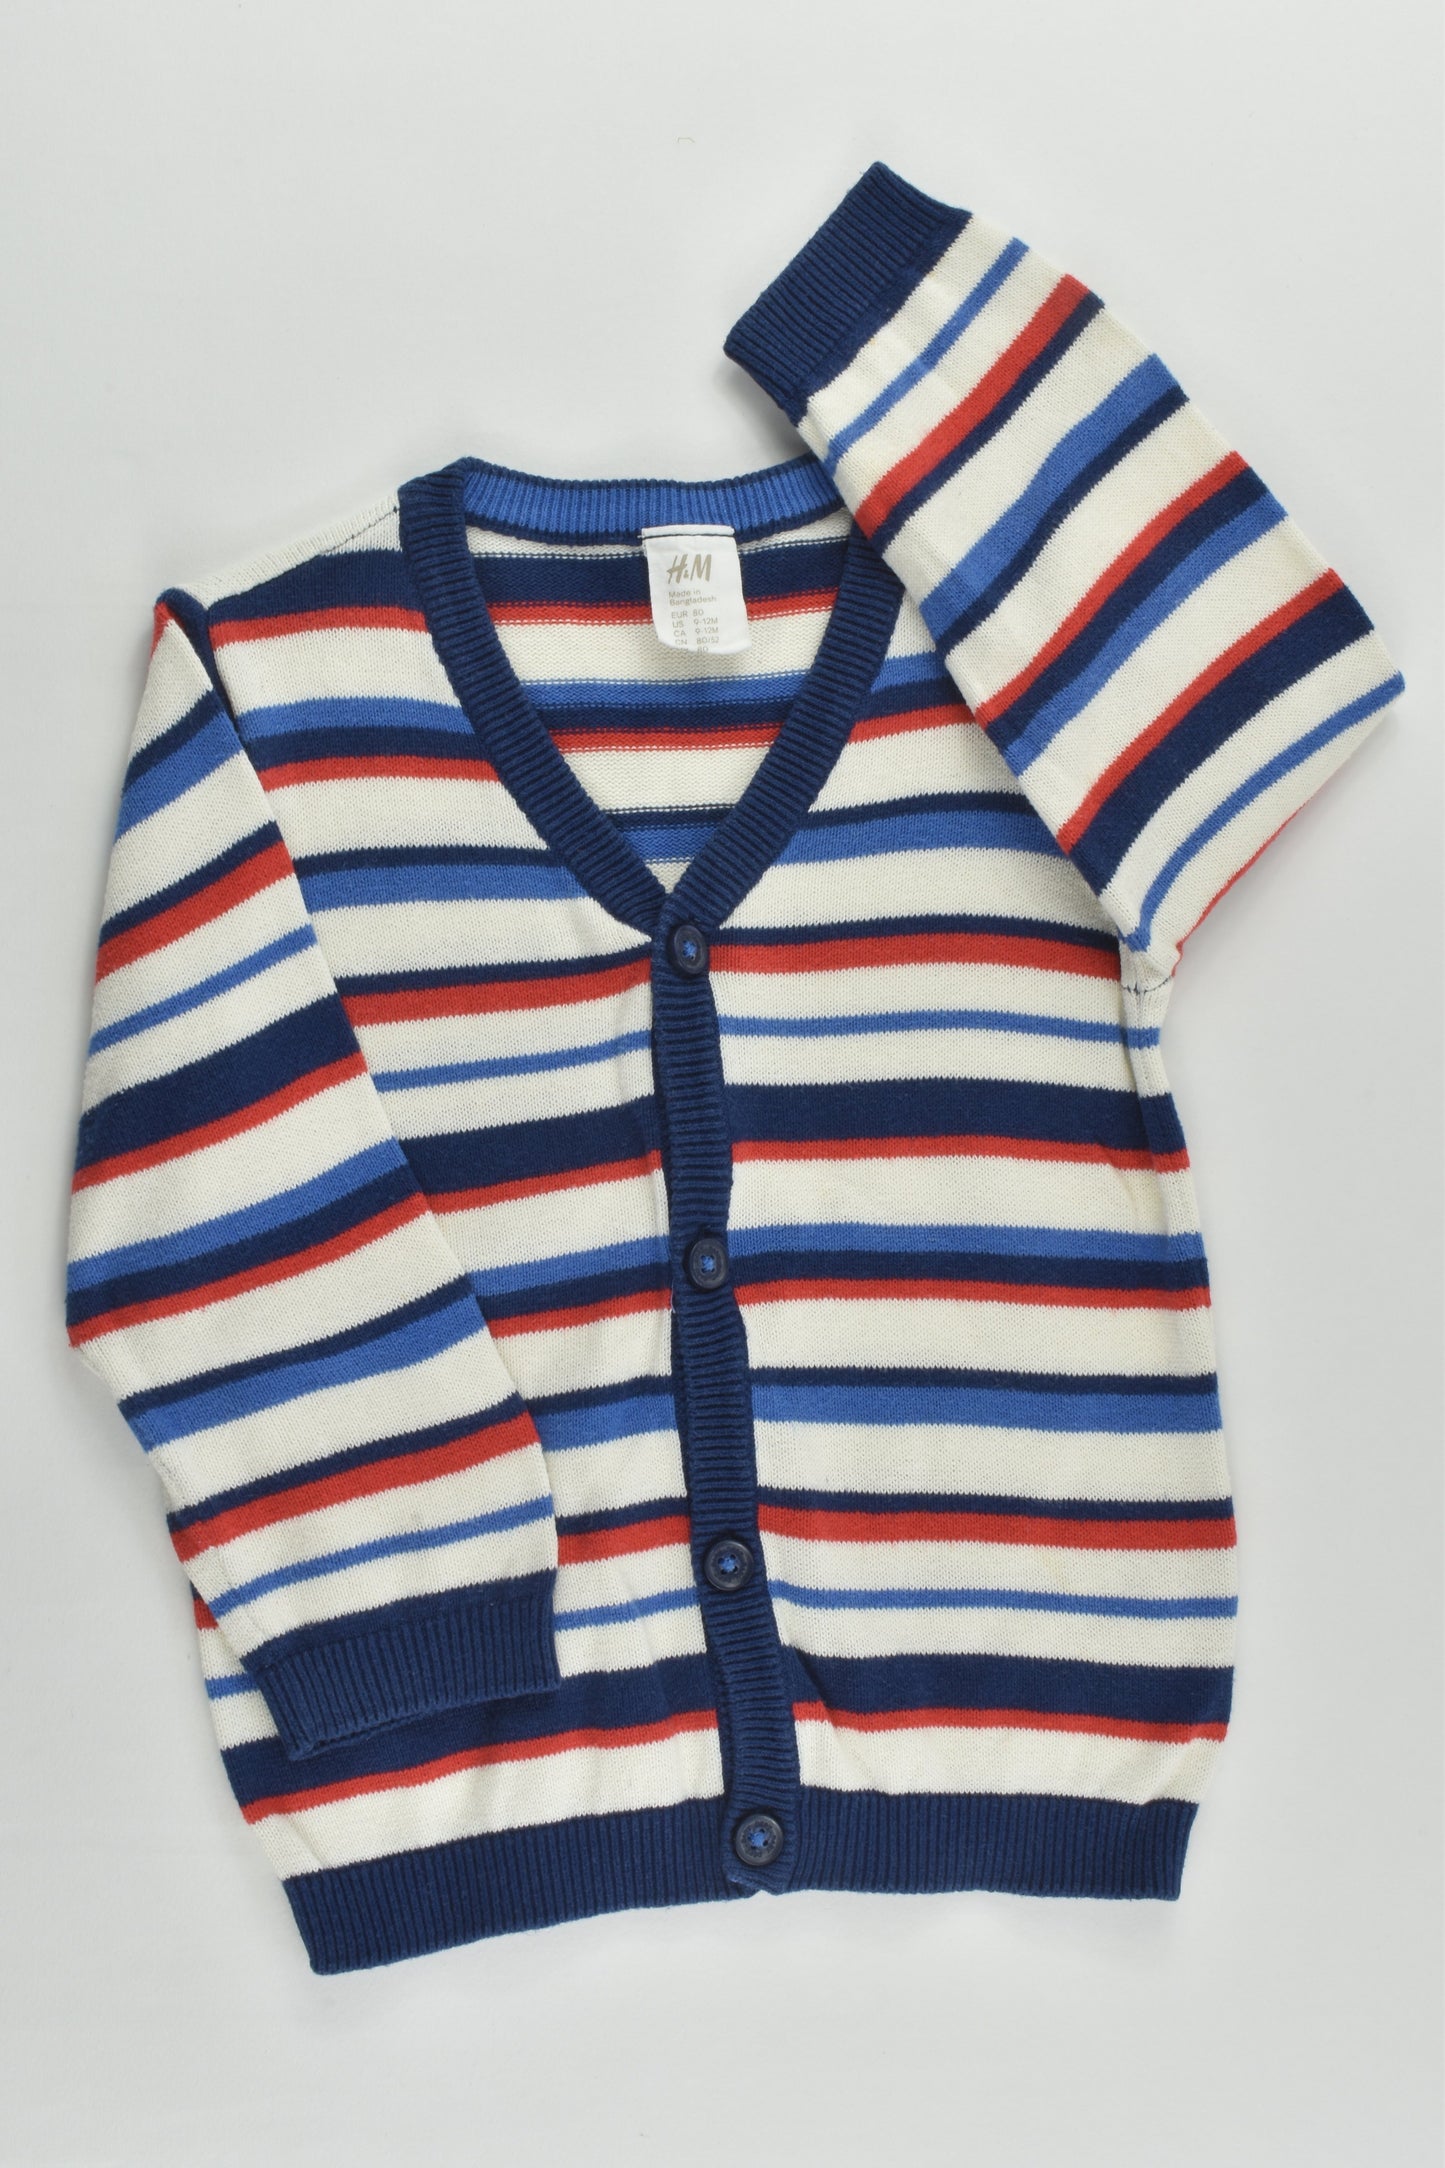 H&M Size 0 (80 cm, 9-12 months) Striped Cardigan